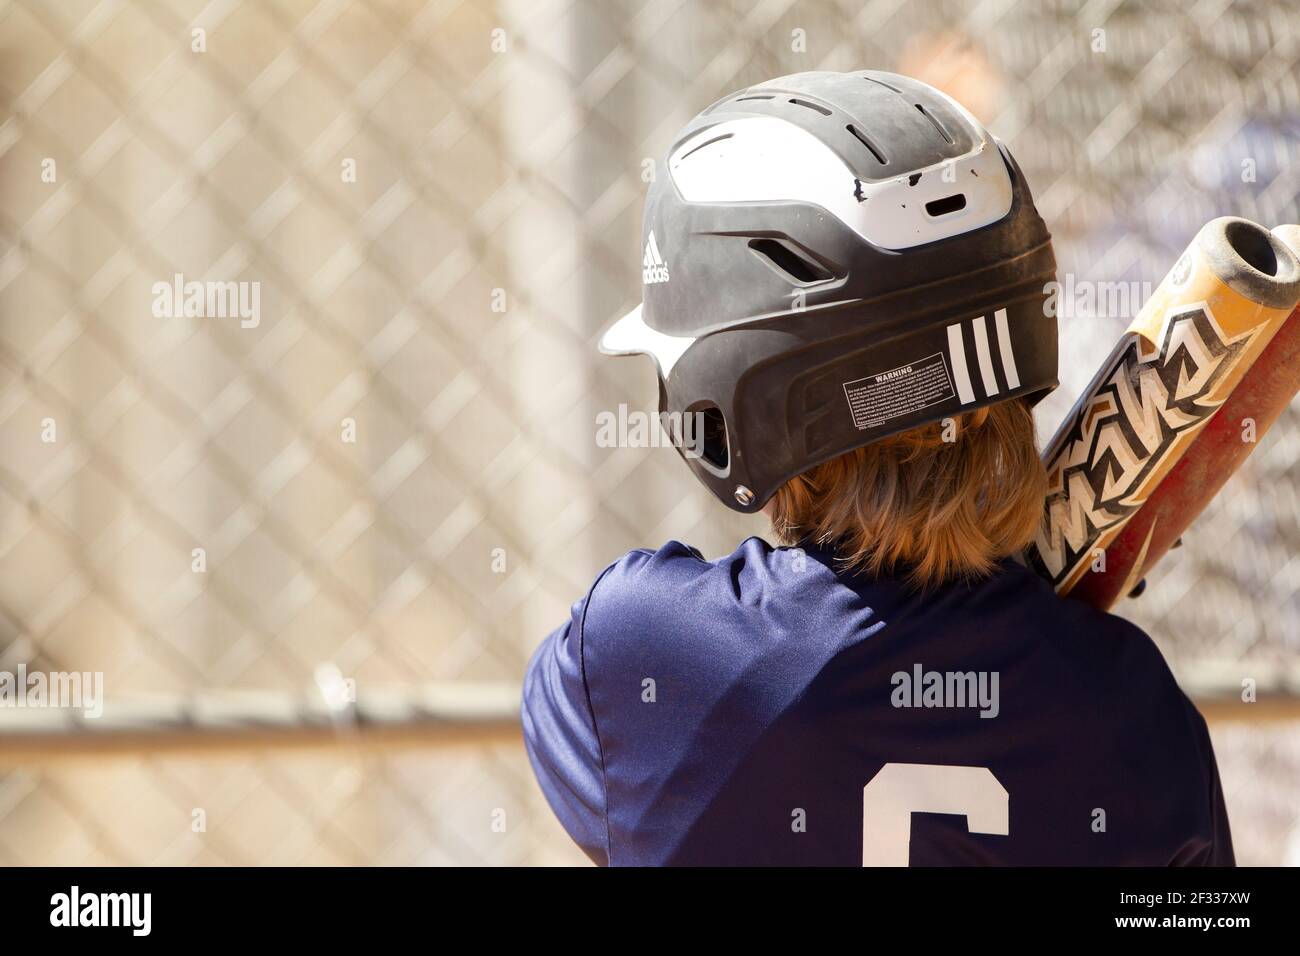 A teenage baseball player prepares to bat during a youth league baseball game. Stock Photo